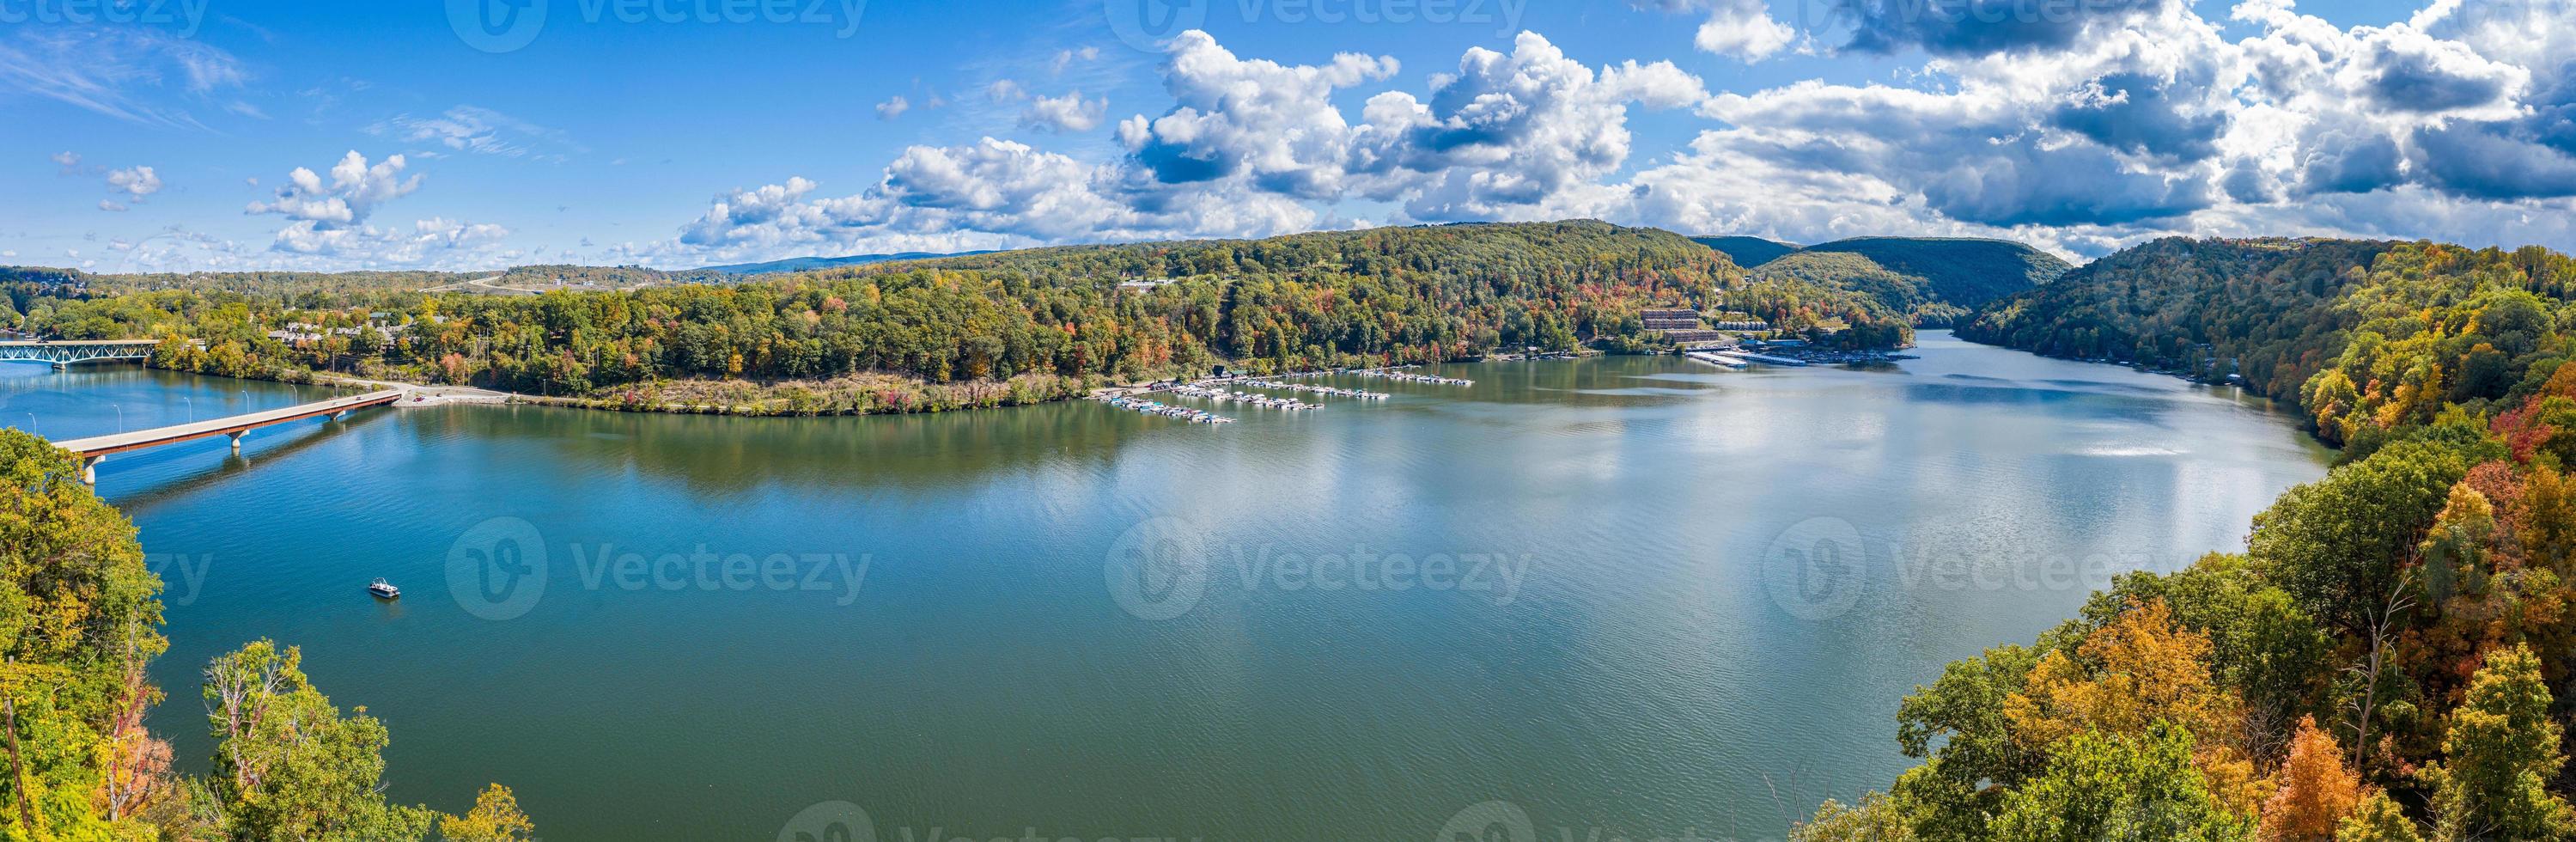 luchtpanorama van herfstkleuren op cheat Lake Morgantown, wv foto